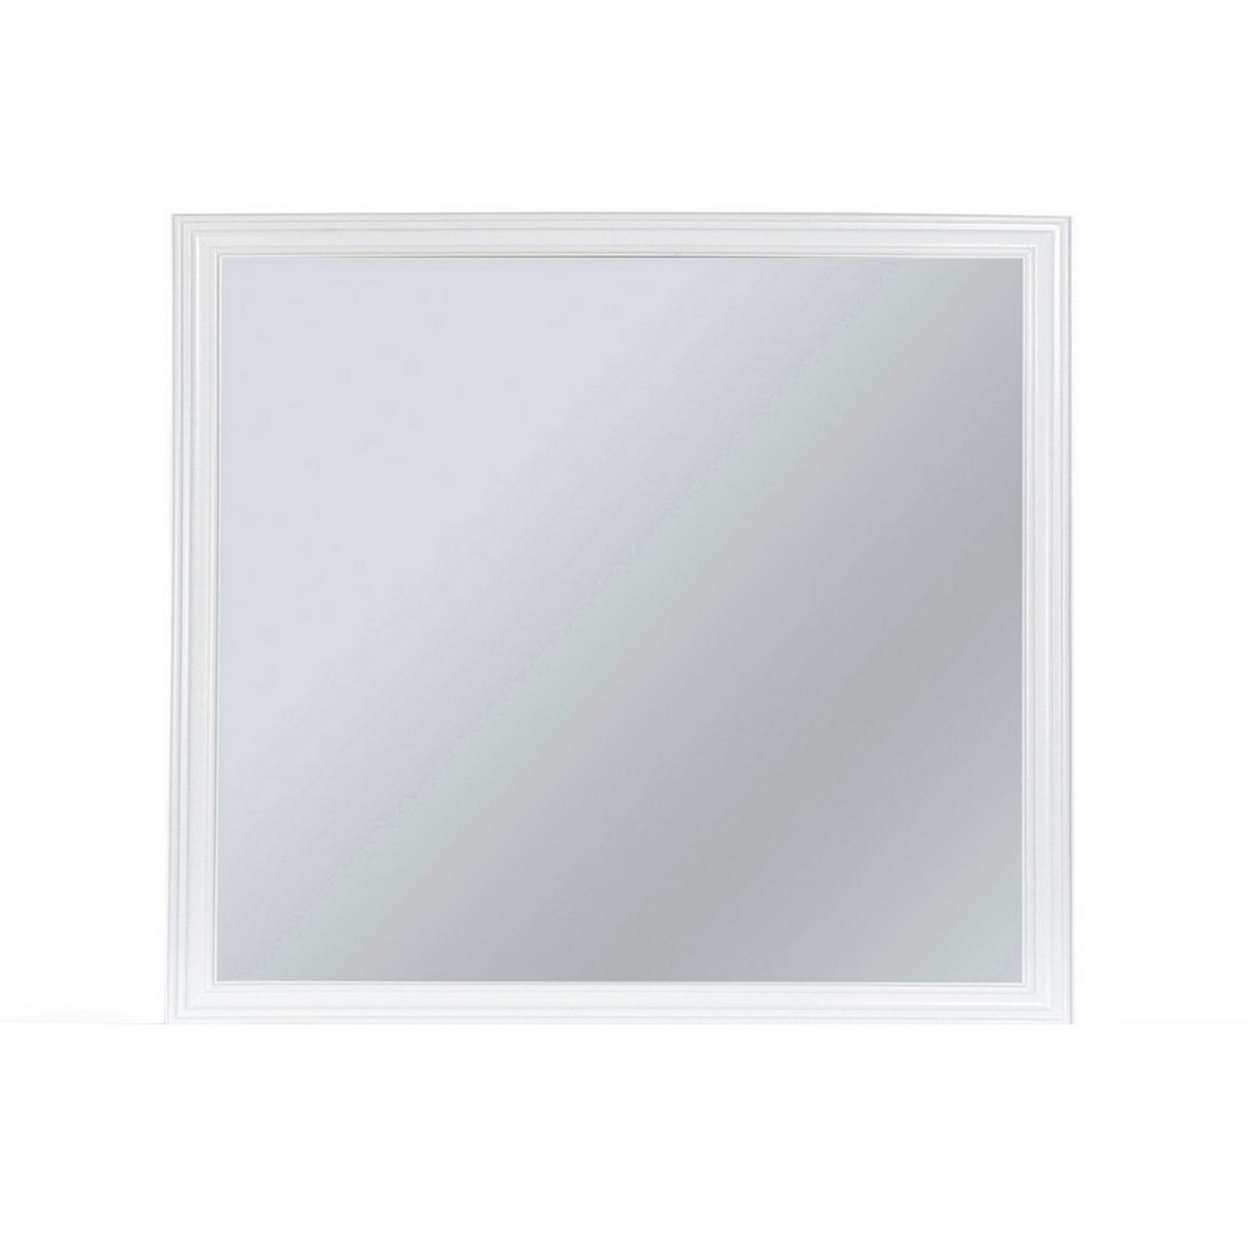 Umi 39 X 39 Dresser Mirror, Molded Design Solid Wood White Square Frame -Saltoro Sherpi